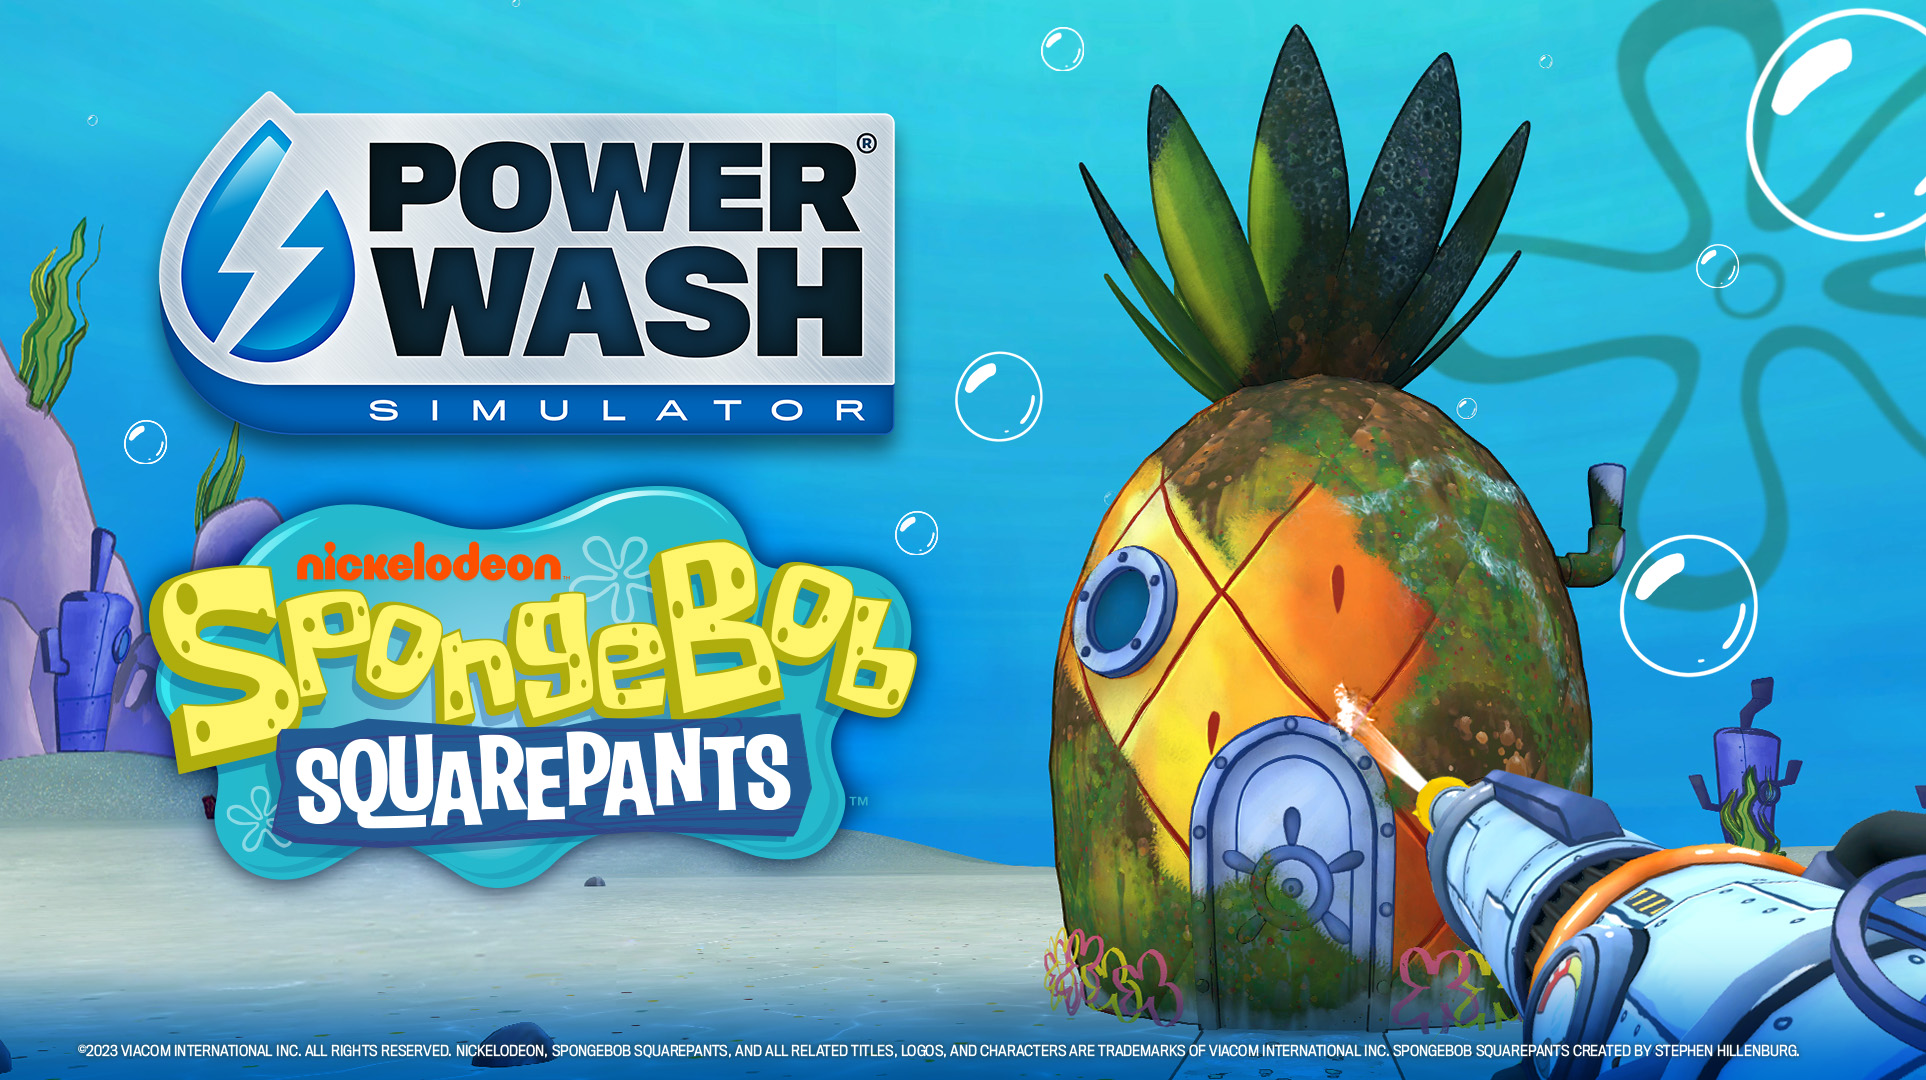 Now you can clean Spongebob’s pineapple house in PowerWash Simulator